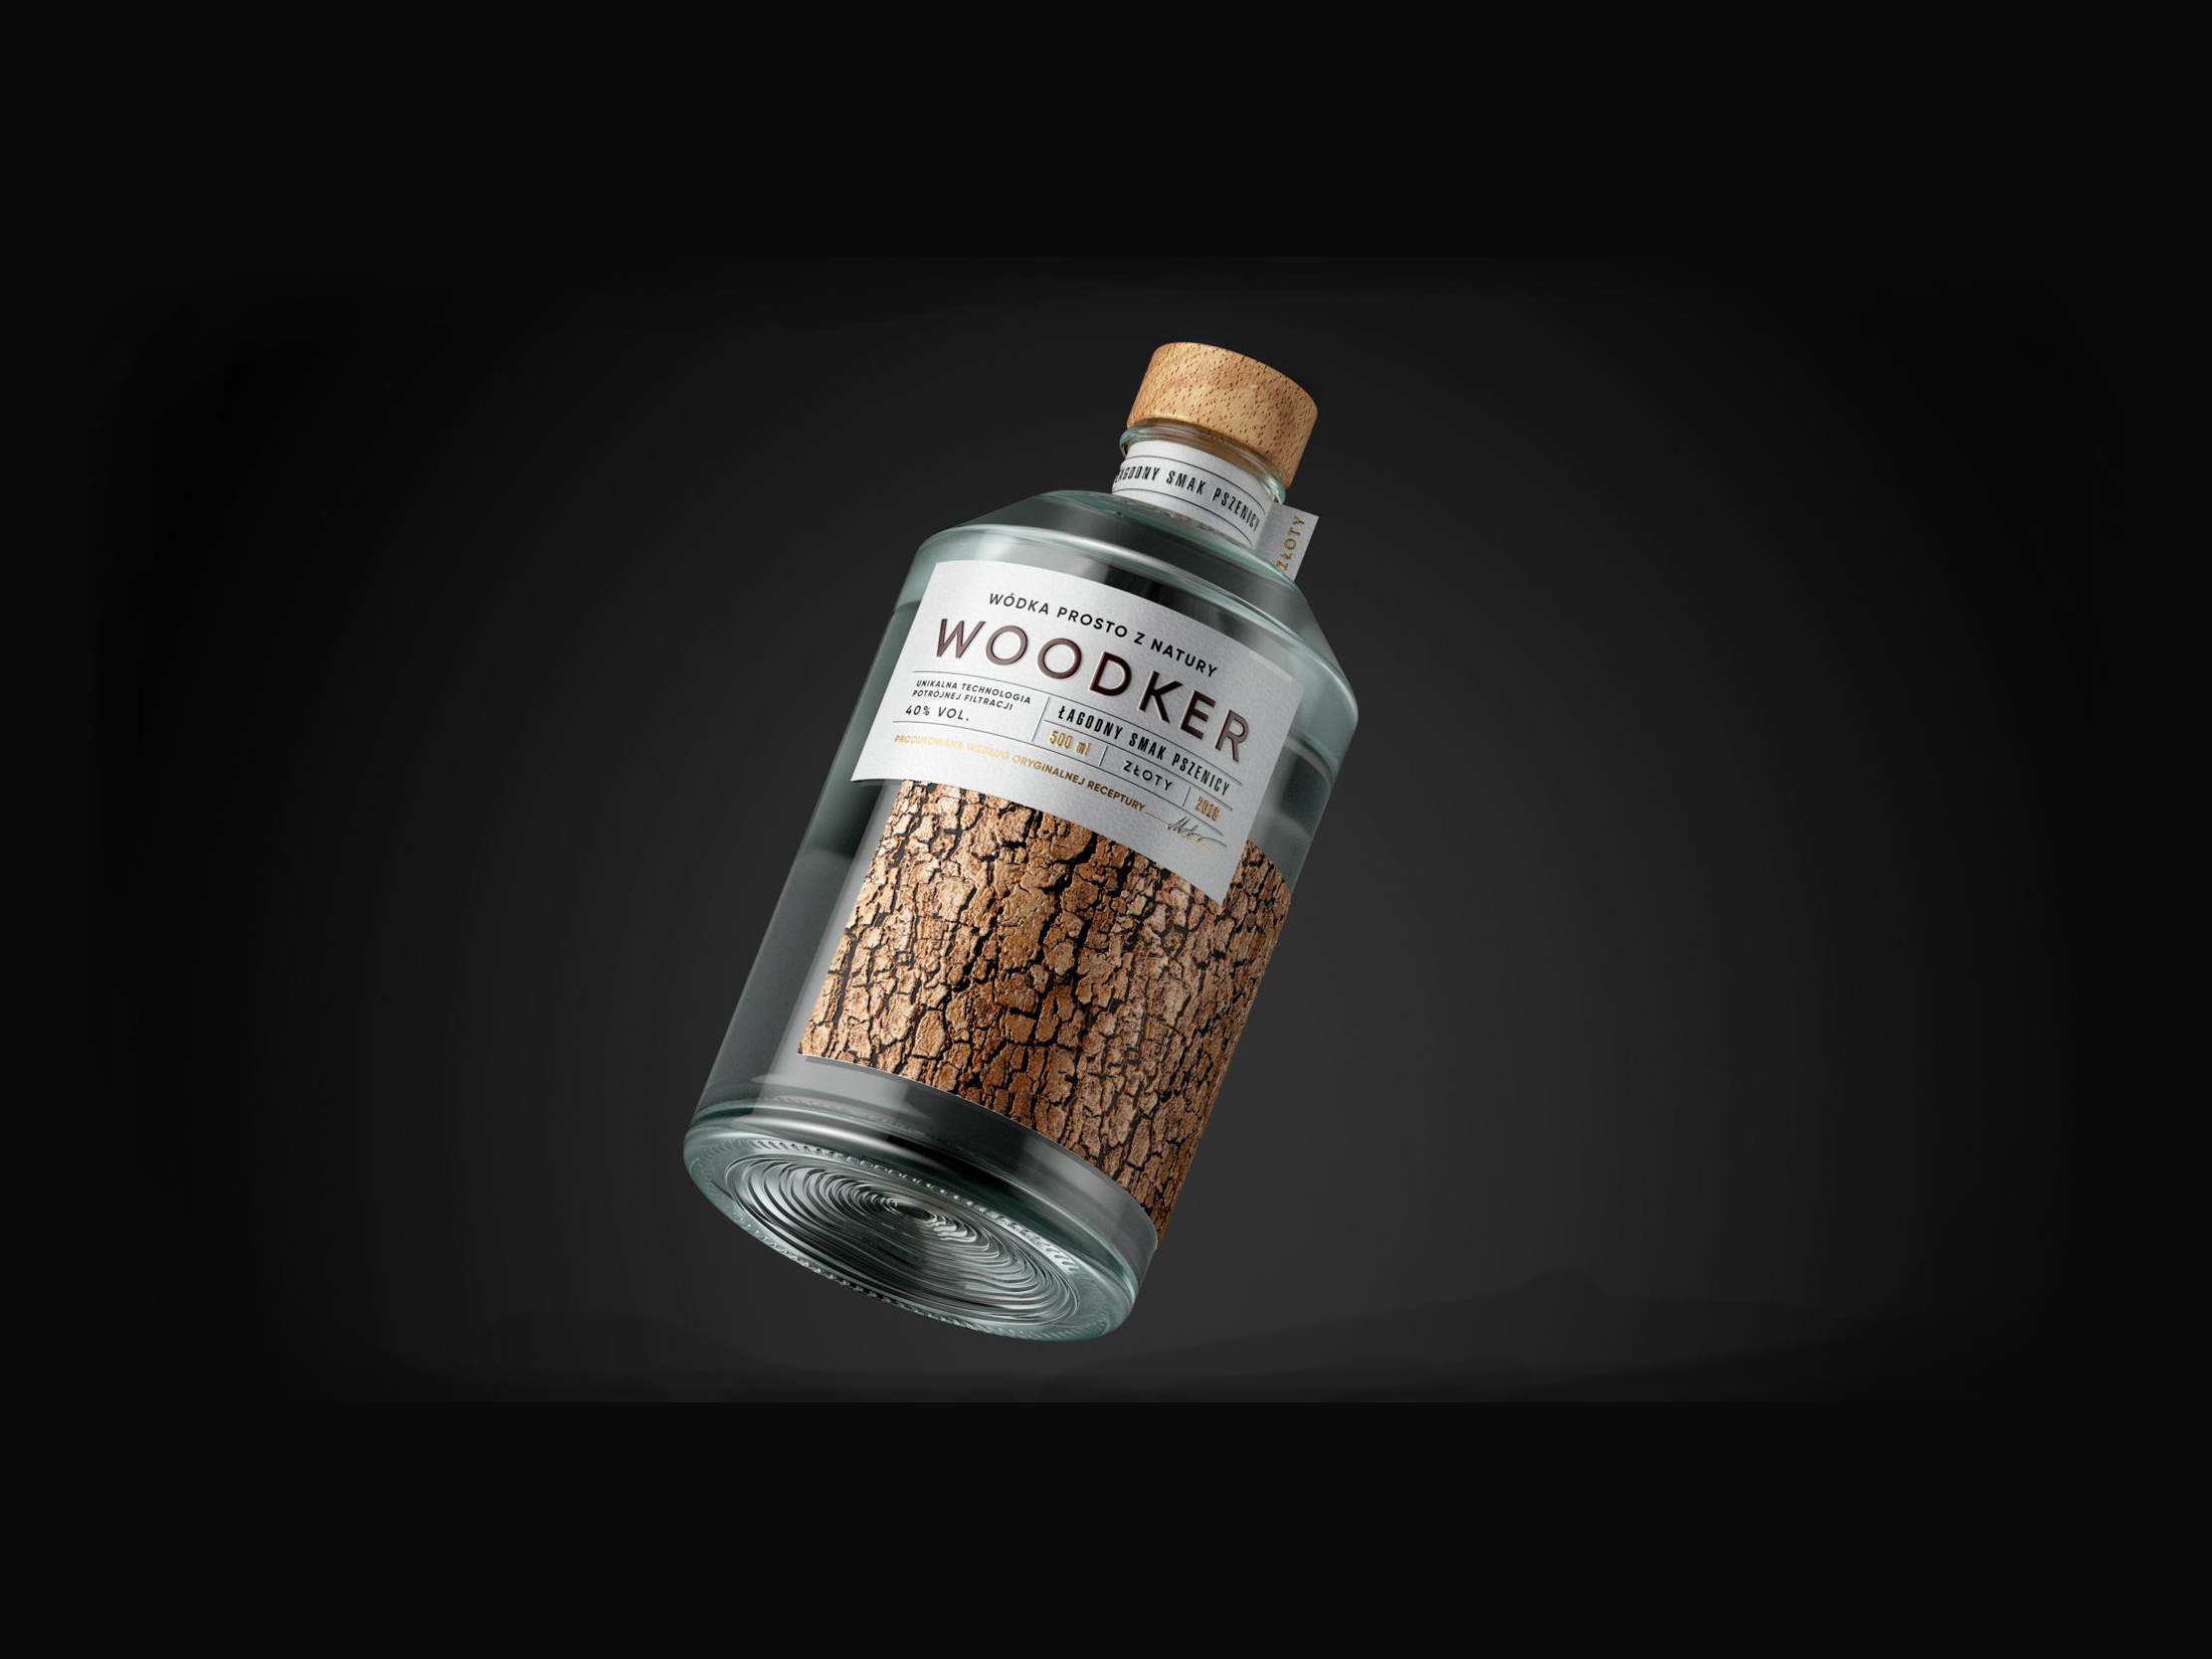 Woodker vodka packaging with bark effect